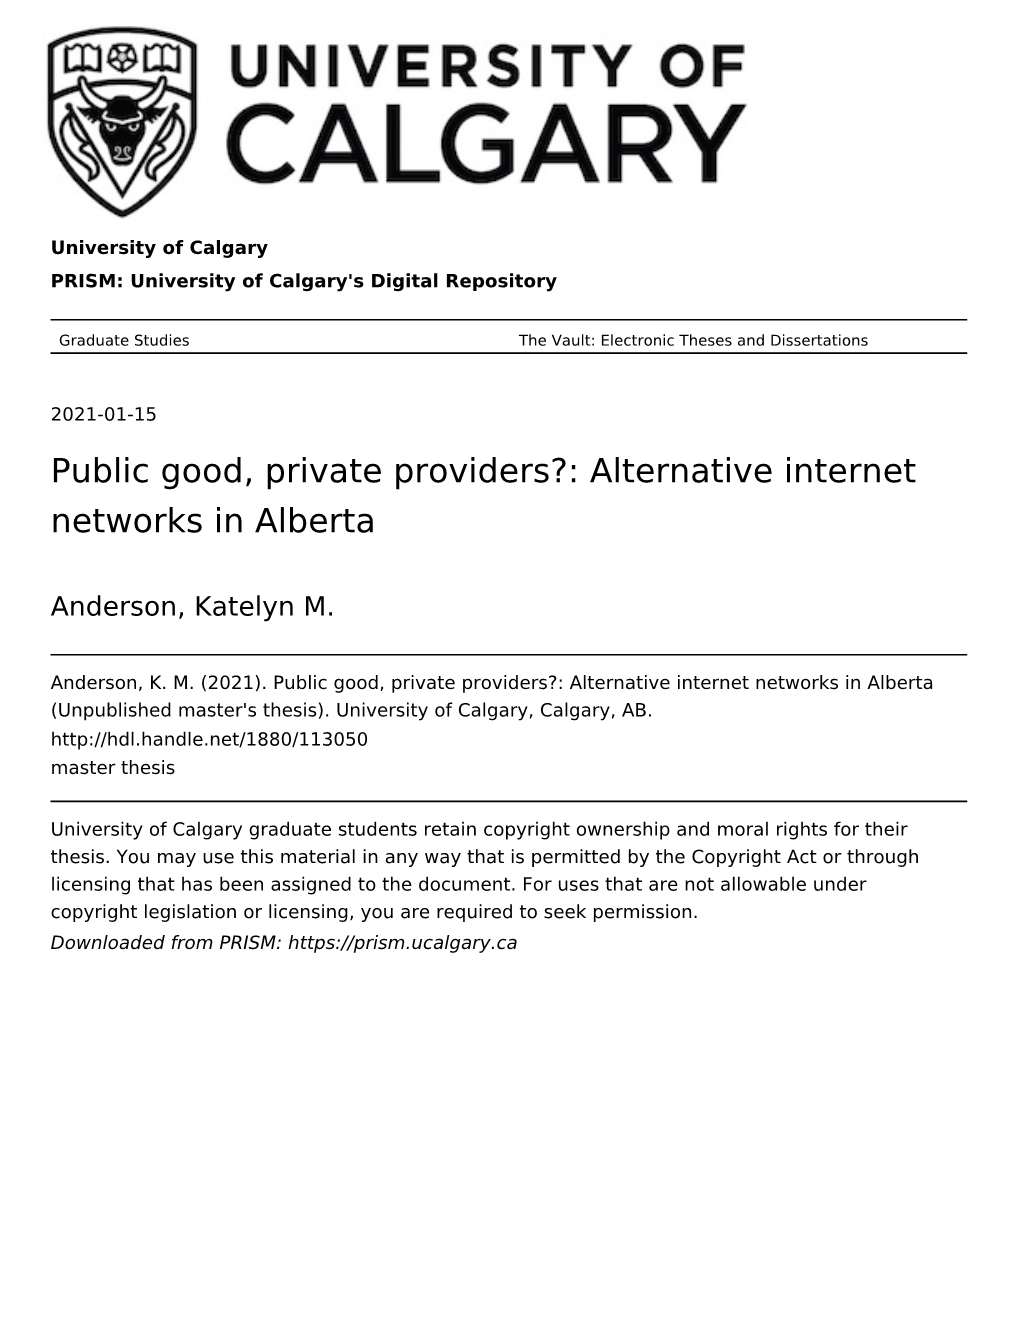 Alternative Internet Networks in Alberta